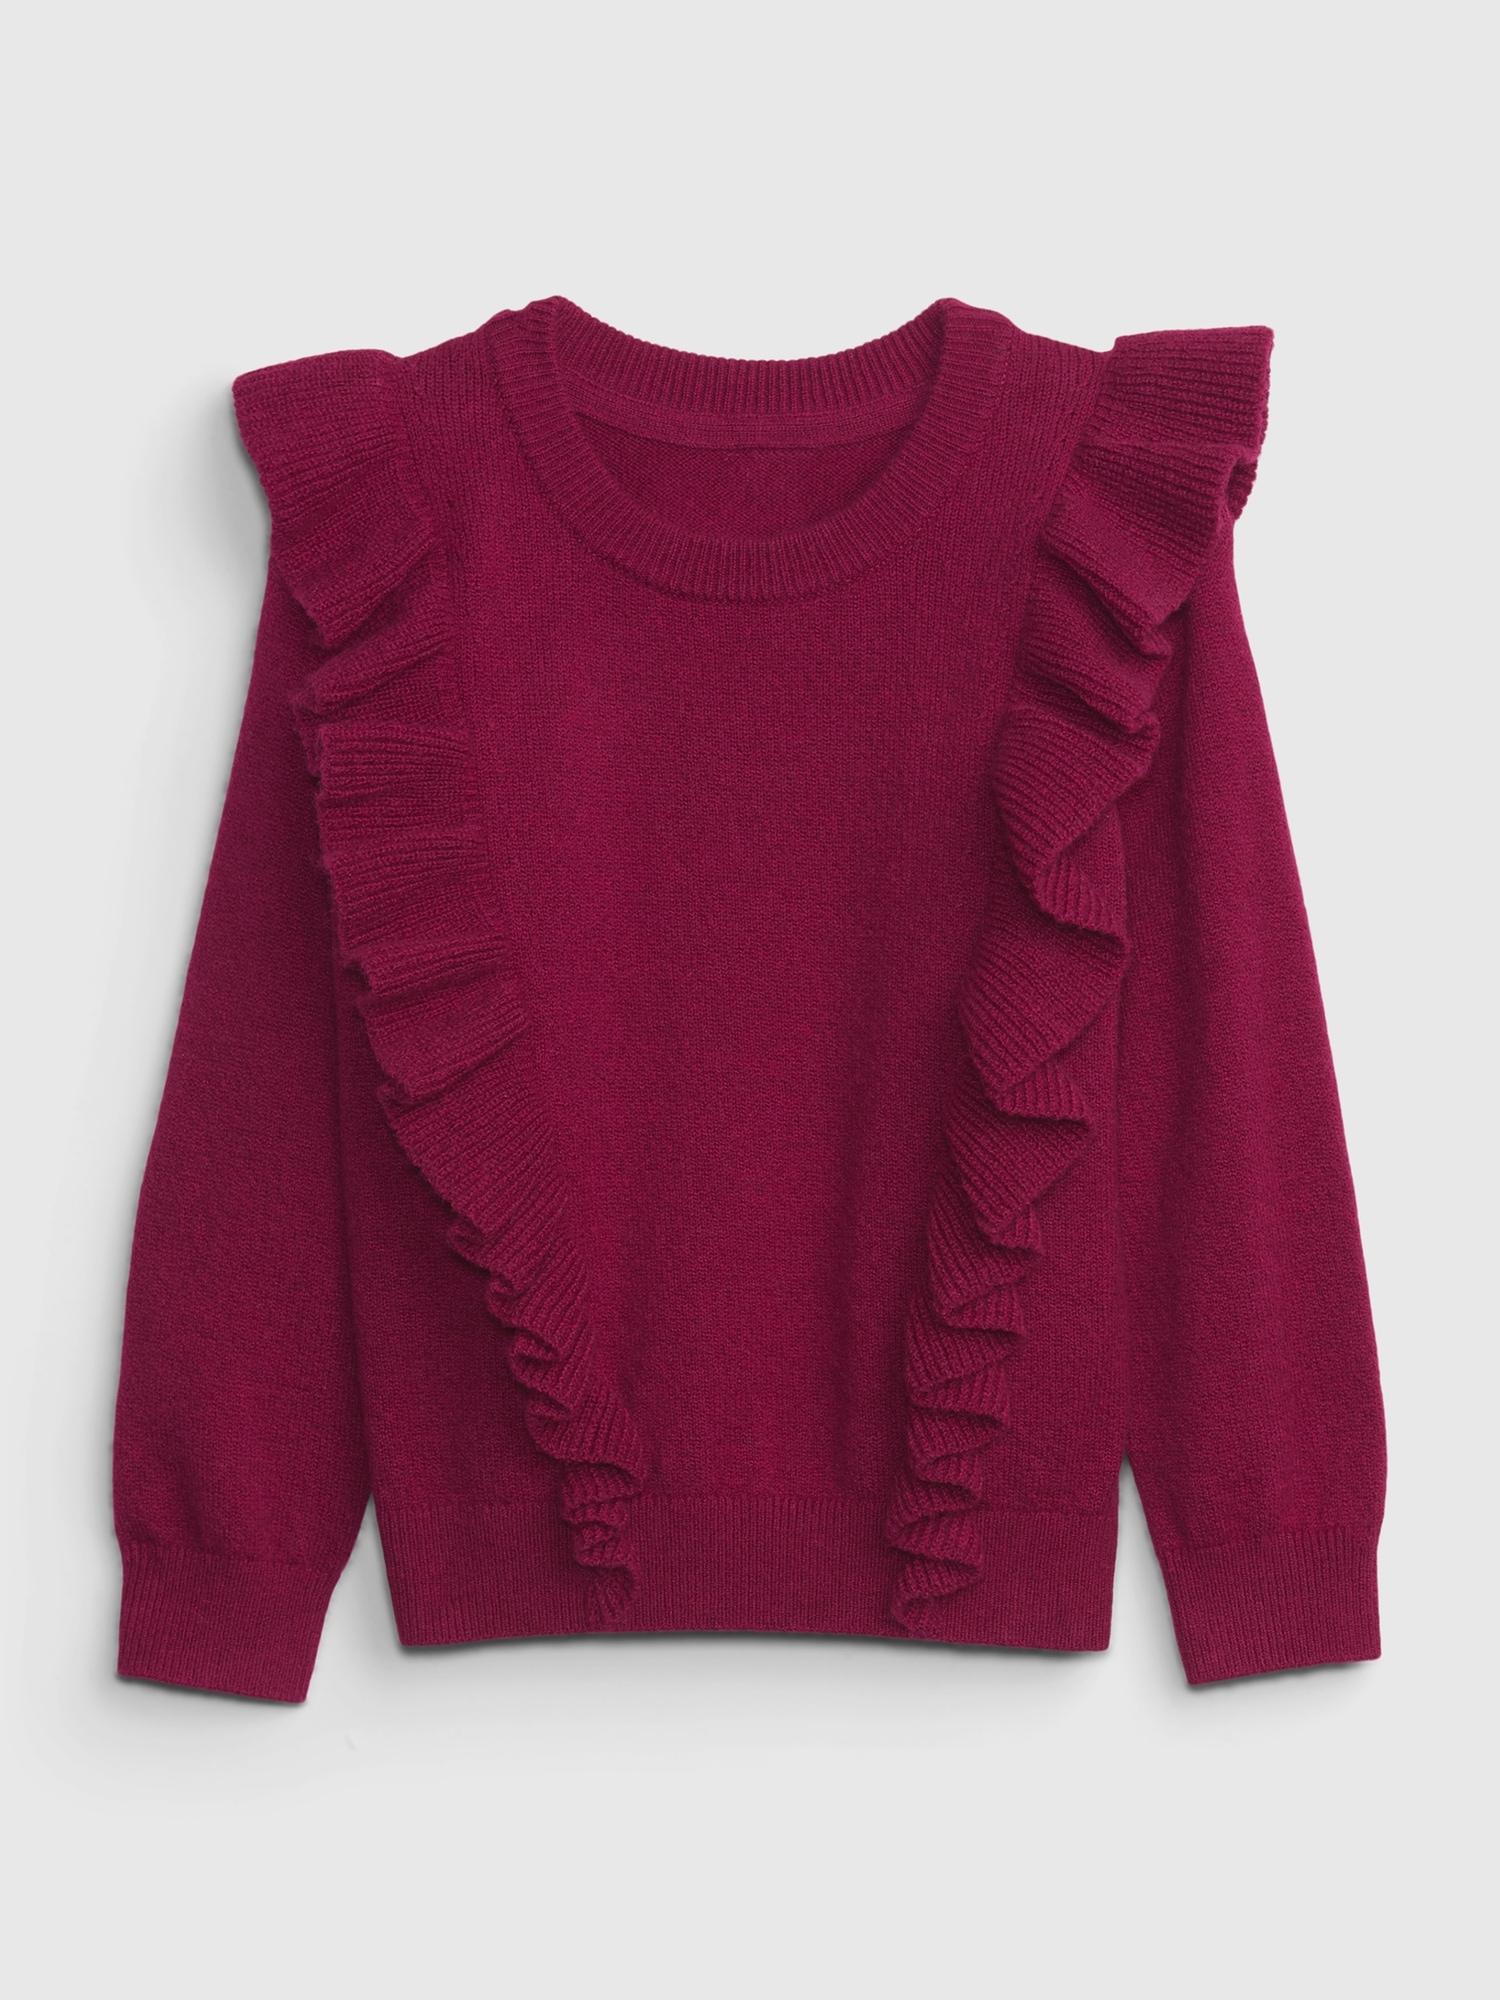 Toddler CashSoft Ruffle Sweater | Gap